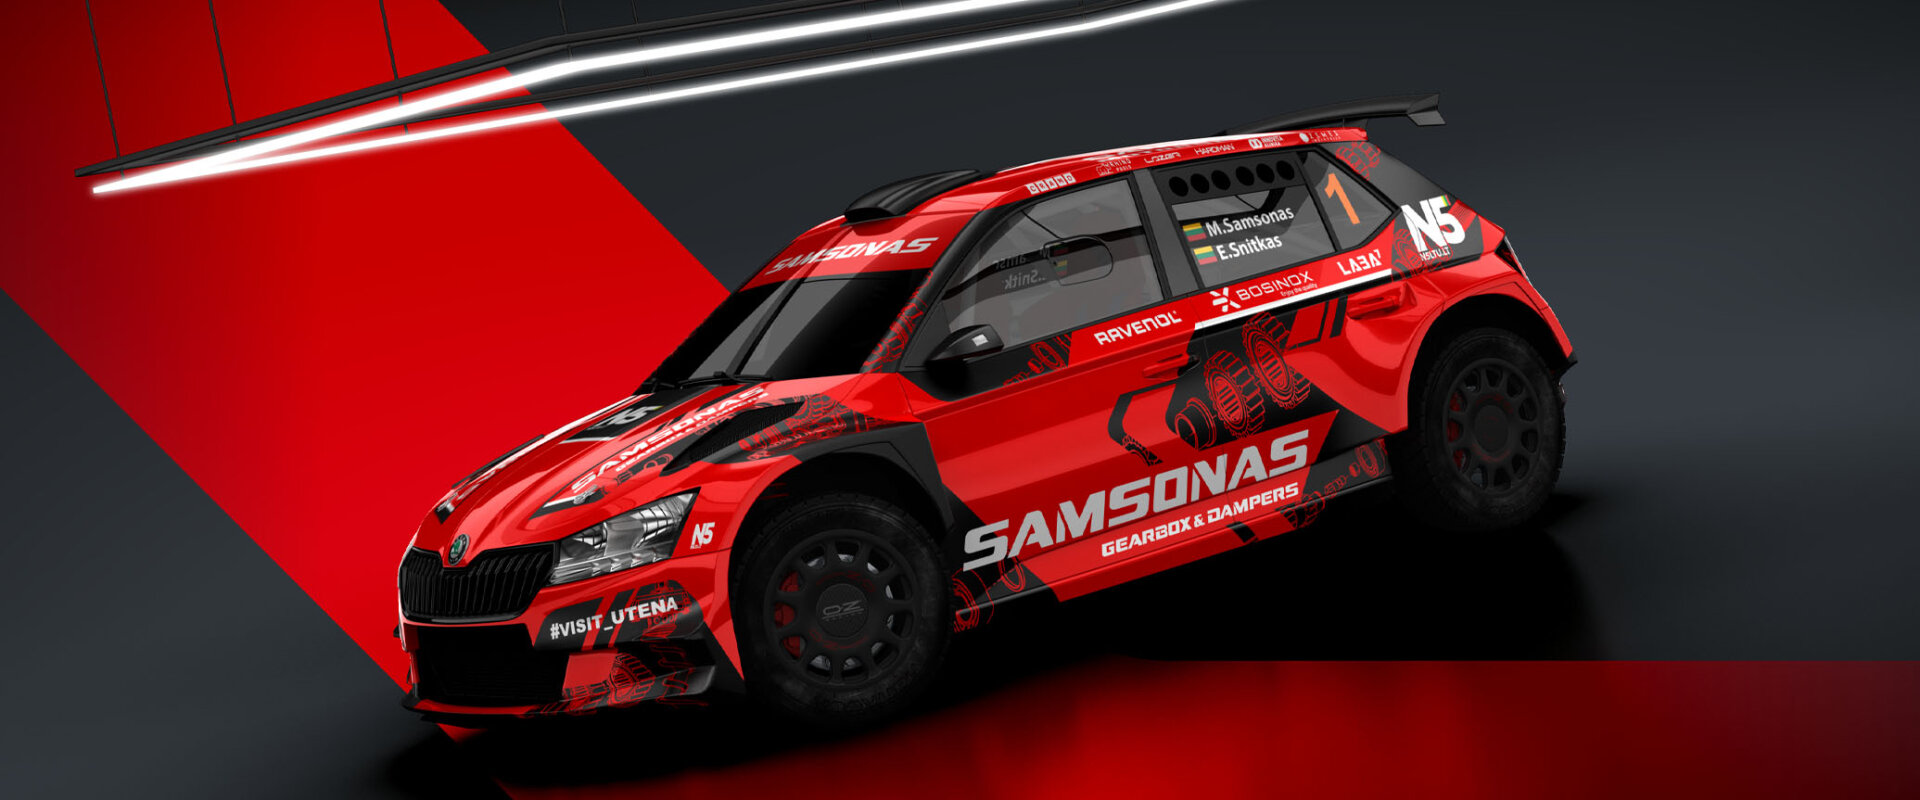 Samsonas Motorsport #1